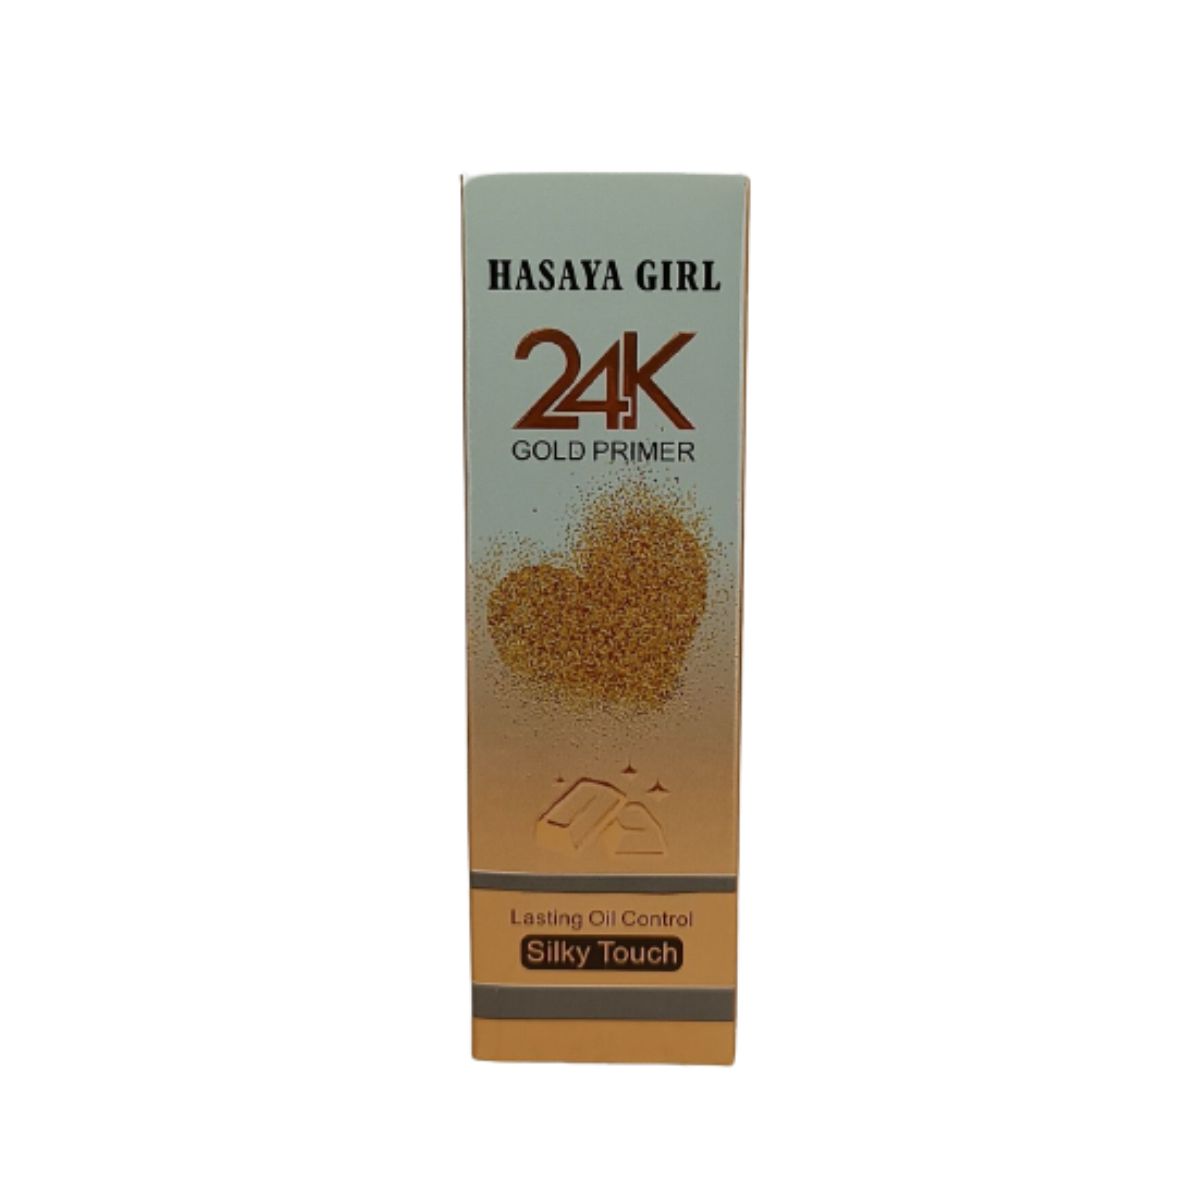 Hasaya Girl 24K Gold Primer Lasting Oil Control - Silky Touch - 35ml (JH-660)